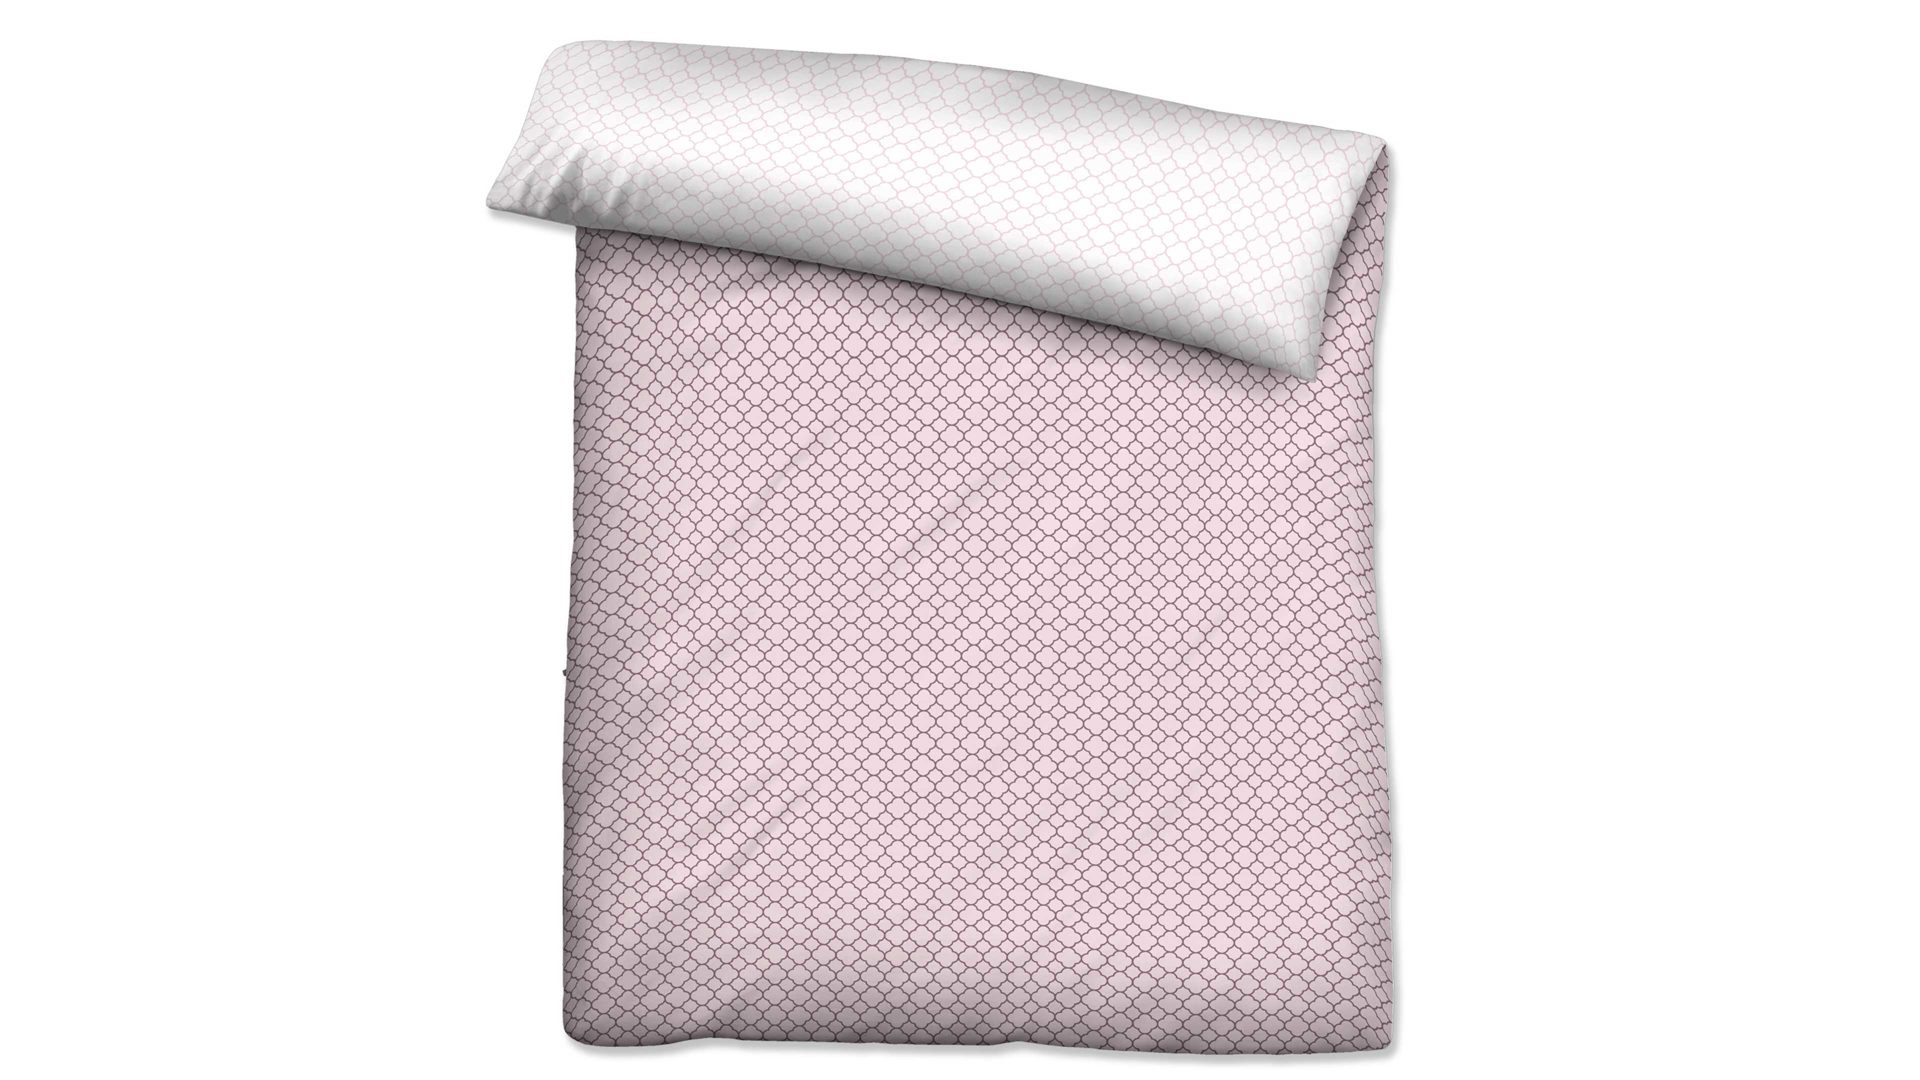 Bettbezug Biberna aus Stoff in Pastell biberna Mako-Satin Bettdeckenbezug Grafik Mix & Match rosefarbenes & weißes Grafikmuster – ca. 200 x 200 cm